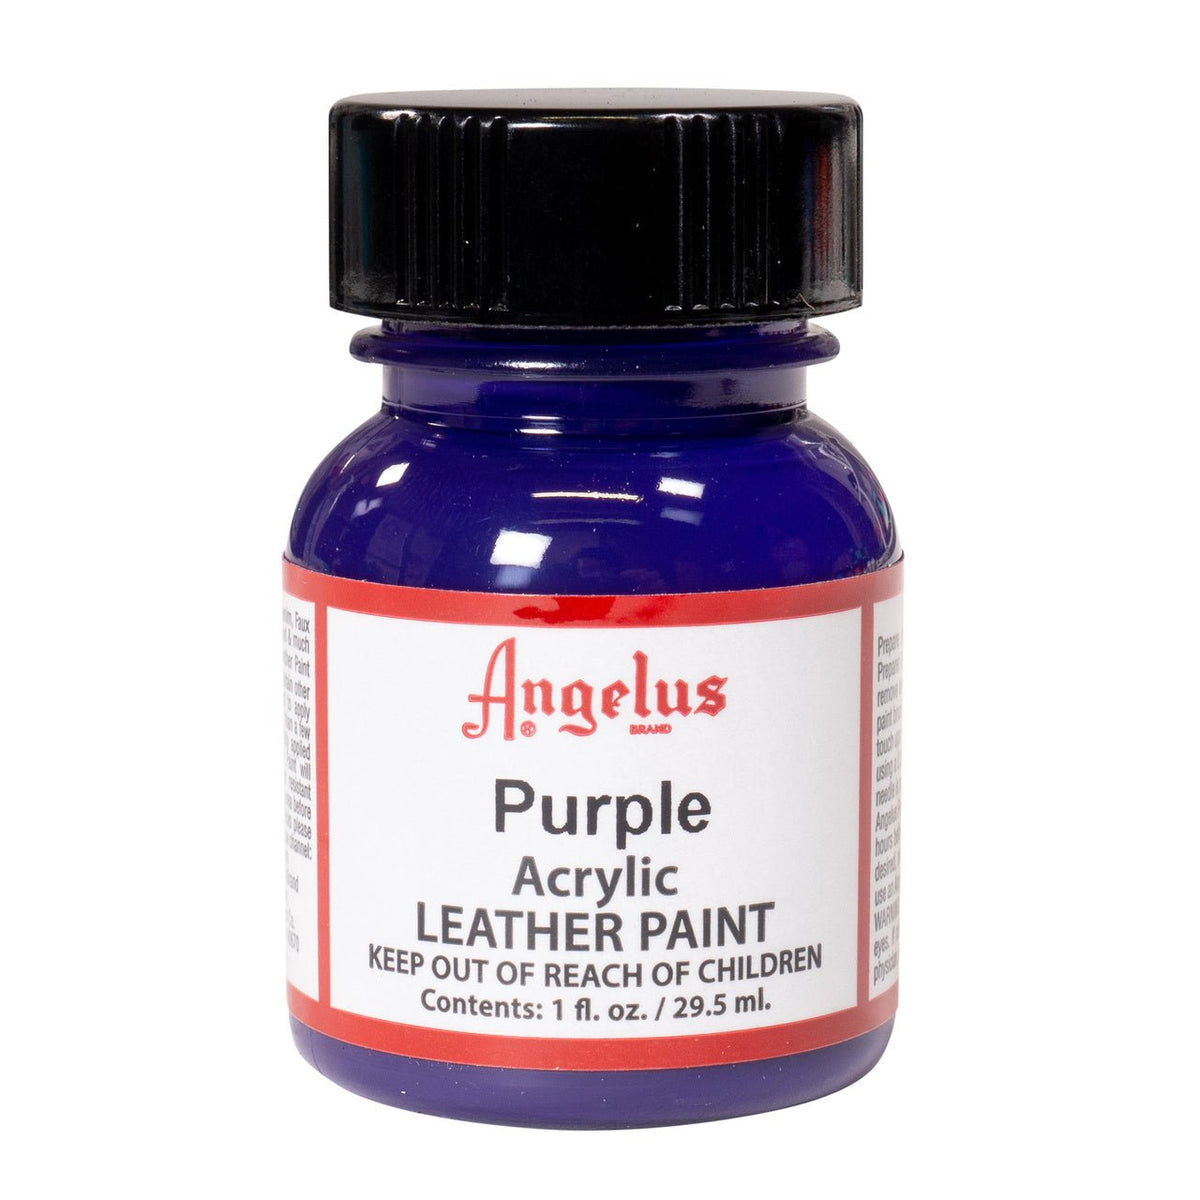 Angelus Acrylic Leather Paint - 1 oz. Bottle - Purple - merriartist.com